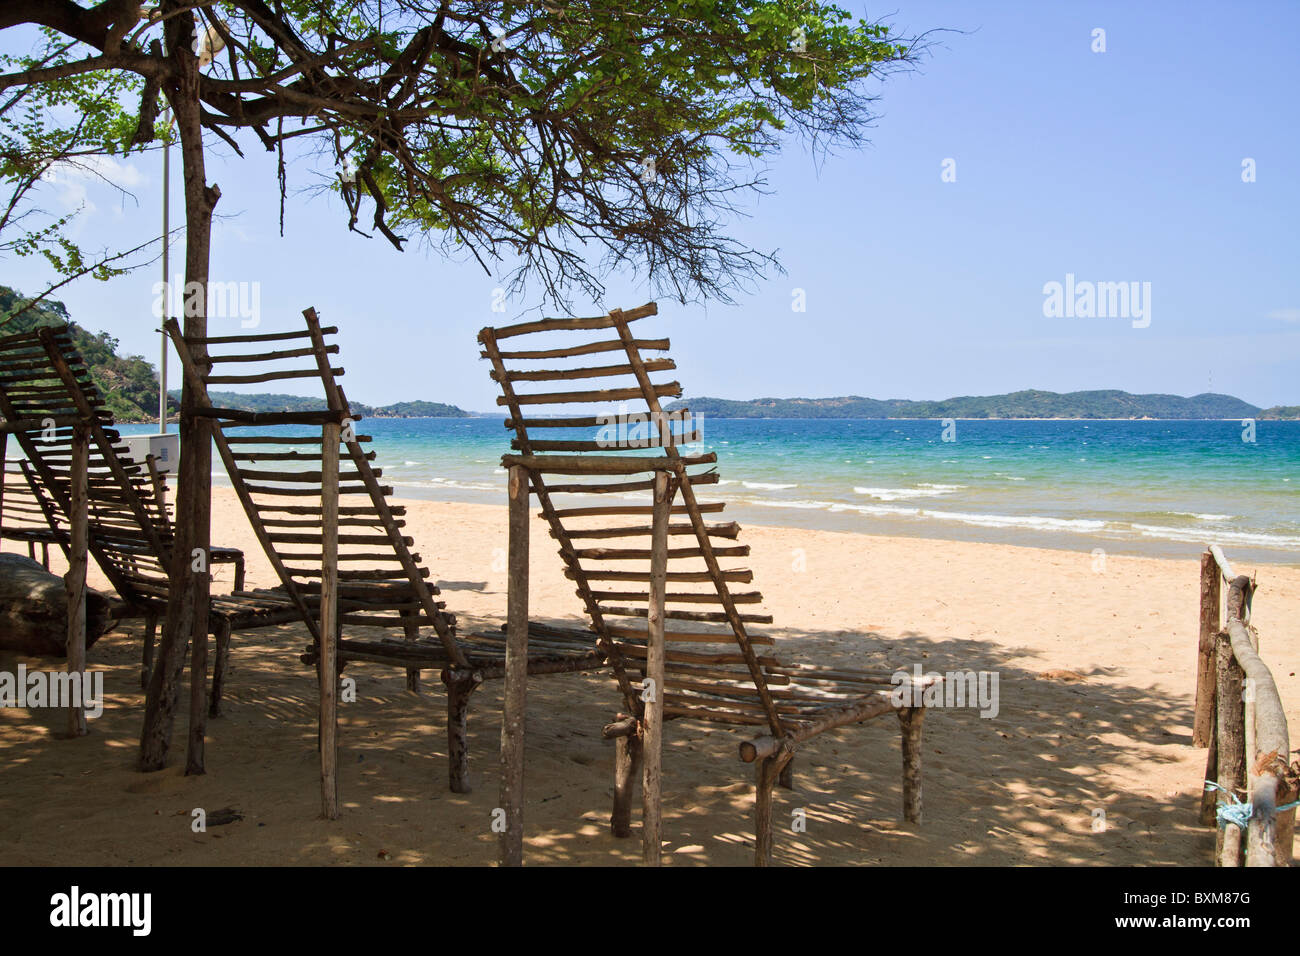 Rustic wooden beach loungers on a tropical beach at Marble Beach, Trincomalee, Sri Lanka East Coast. Stock Photo